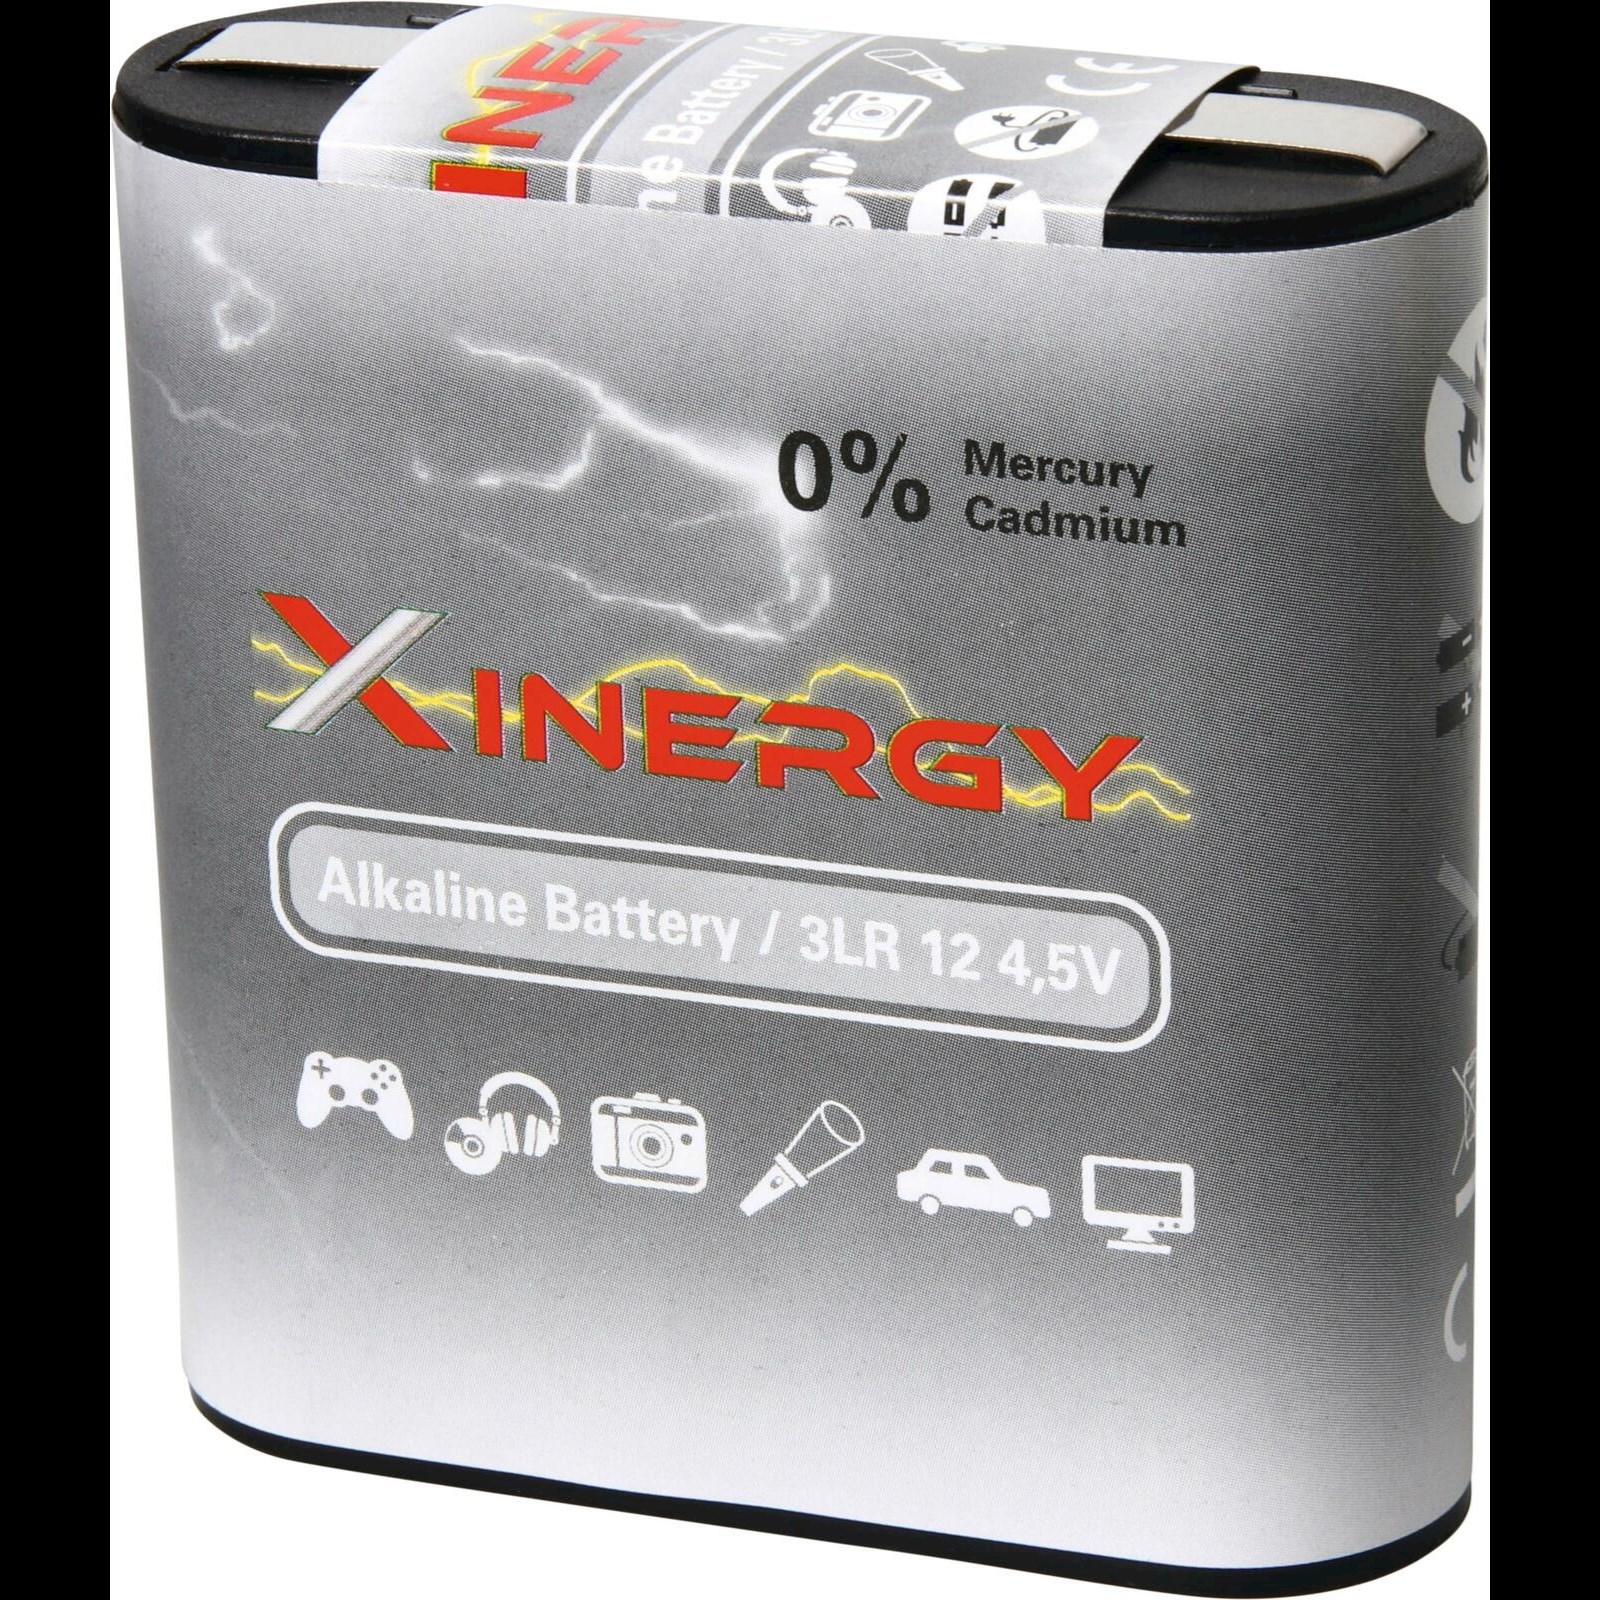 Batterie LR12 4.5 V Alkaline kaufen - Batterien - LANDI